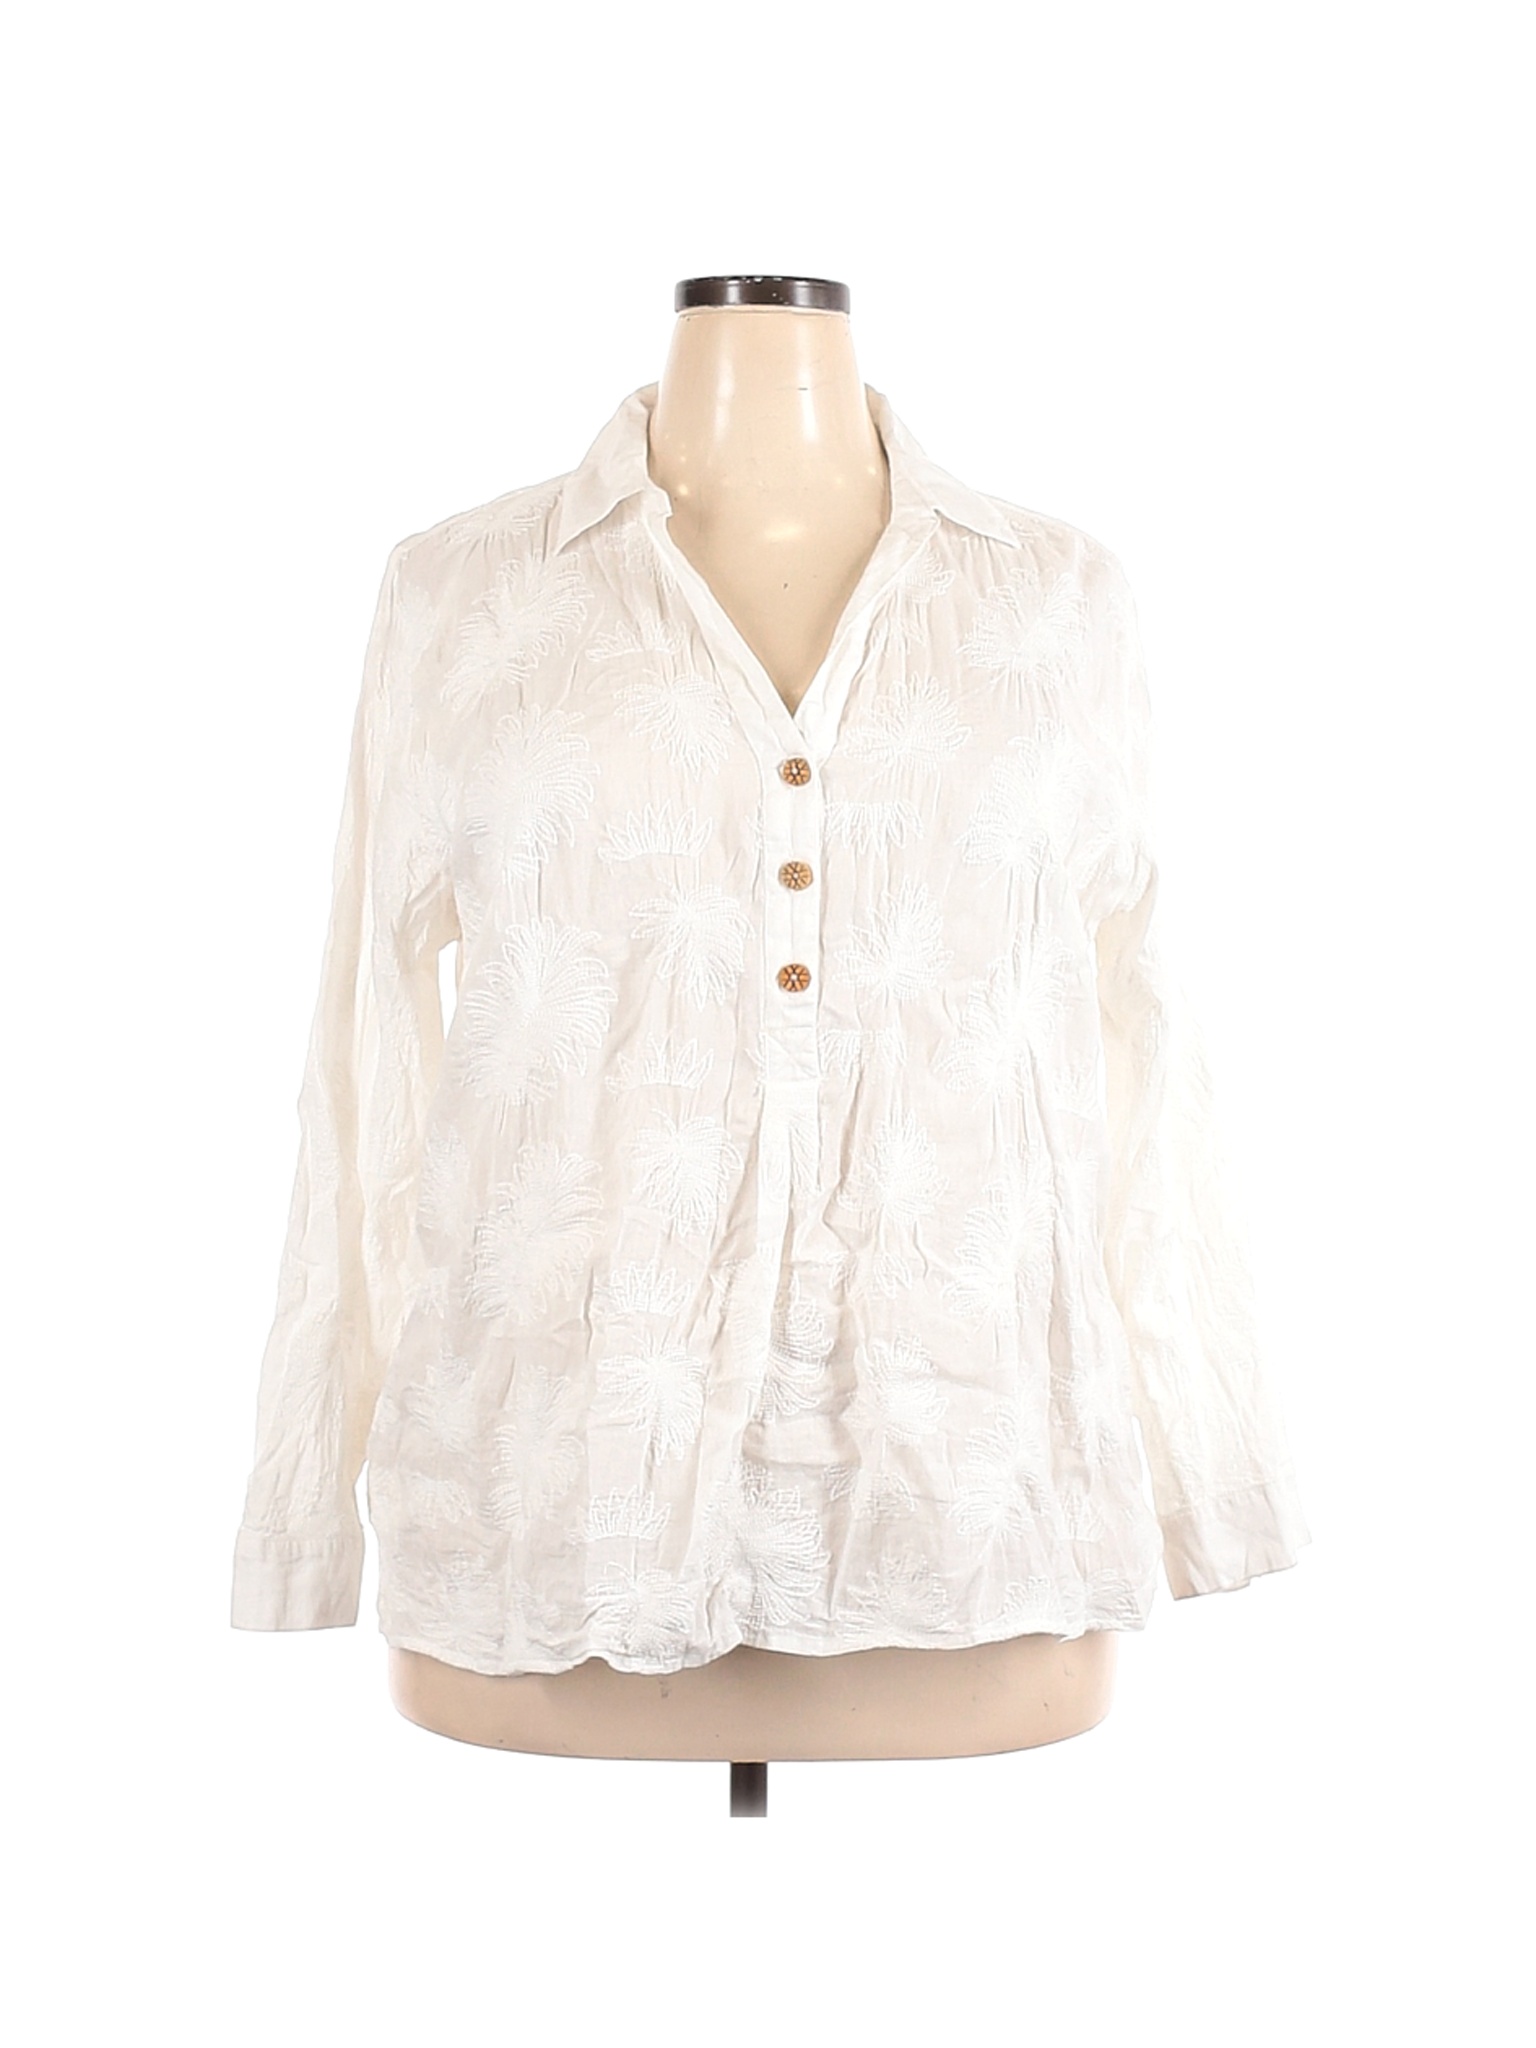 Soft Surroundings Women White Long Sleeve Blouse 2X Plus | eBay